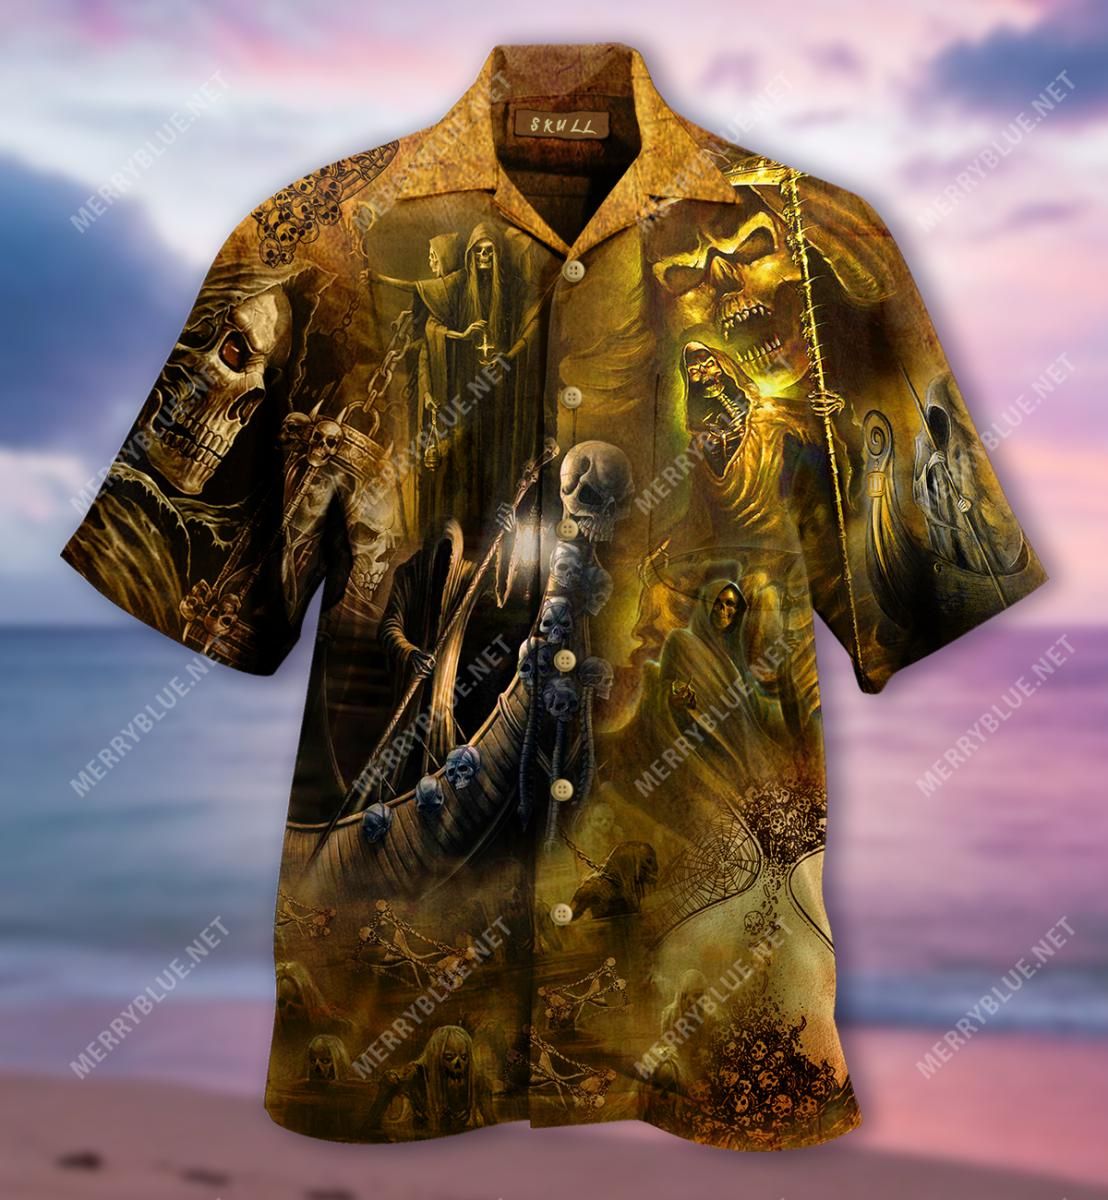 Go To Hell Skull Aloha Hawaiian Shirt Colorful Short Sleeve Summer Beach Casual Shirt